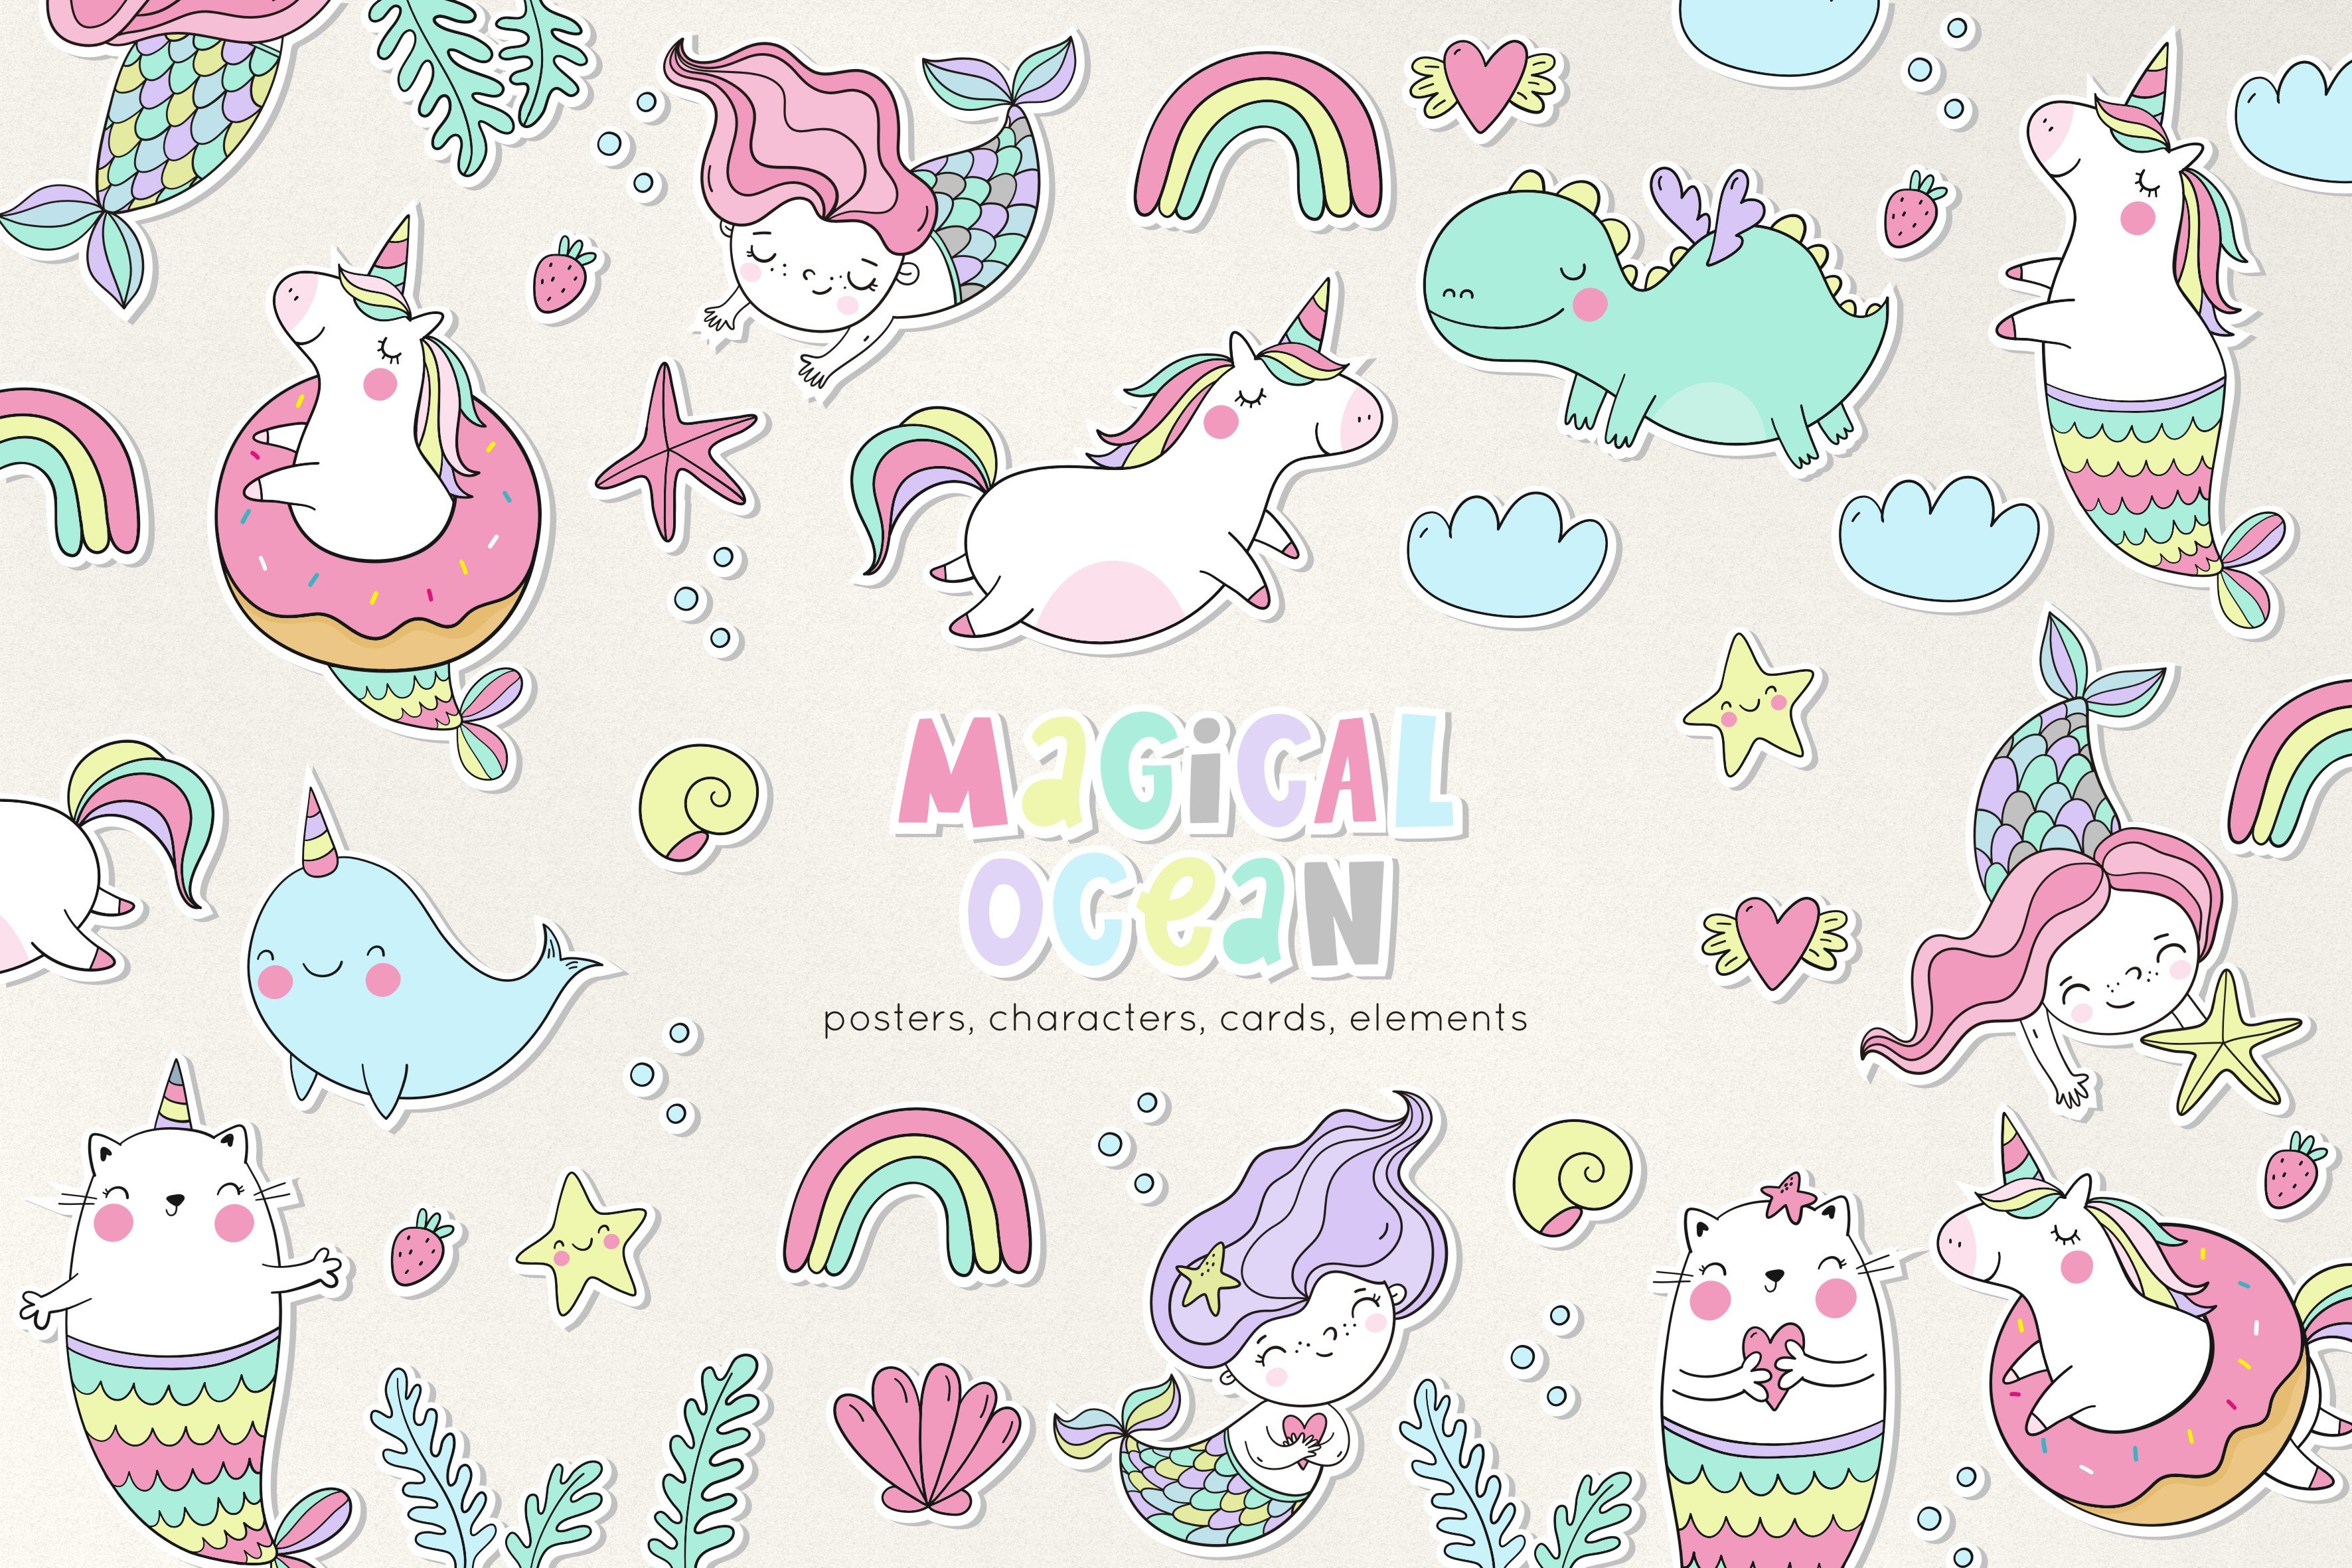 Unicorns, Mermaids Prints & Patterns cover image.